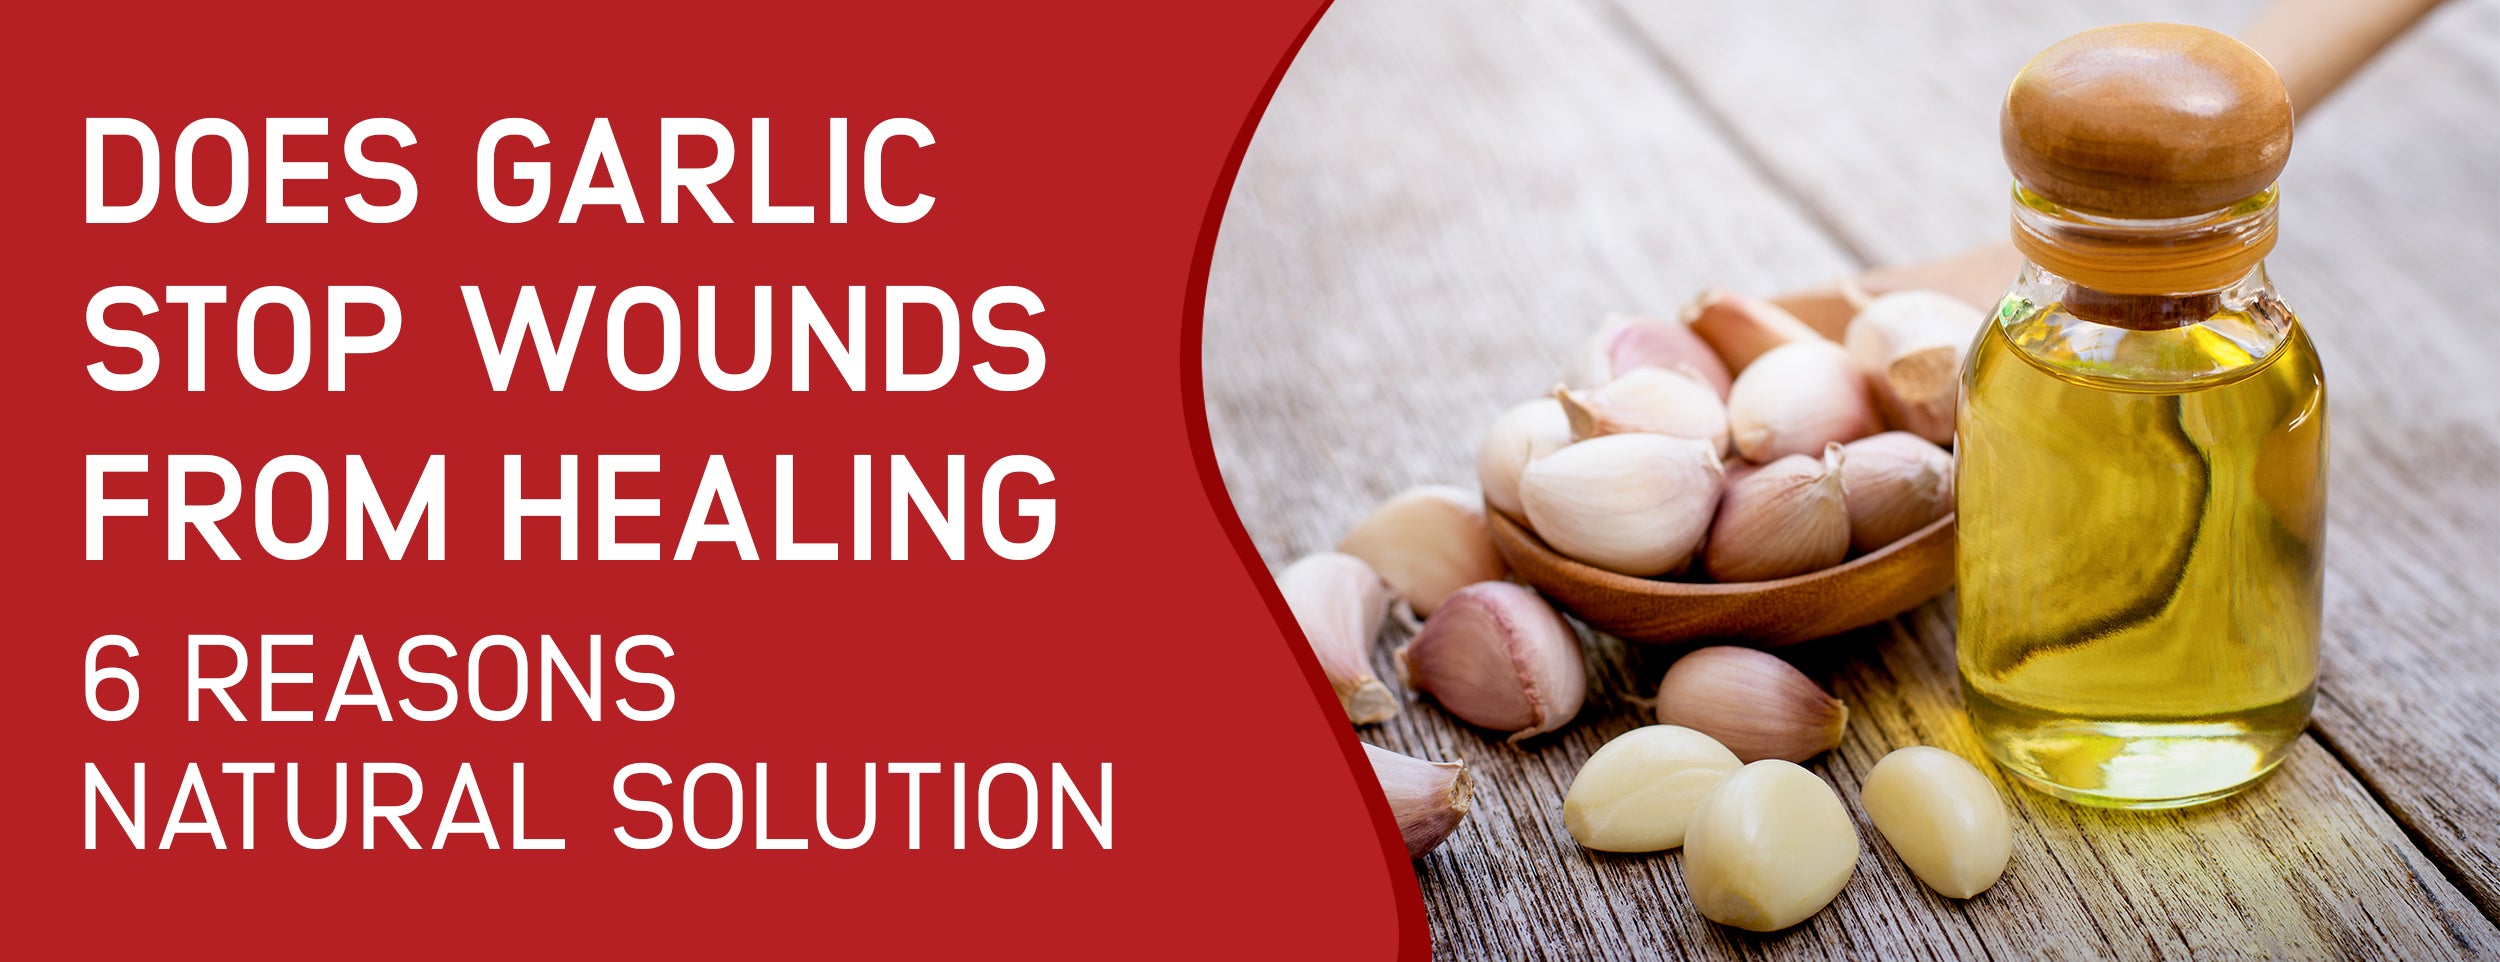 Medical Use & Mechanism of Garlic's Anti-Healing Properties